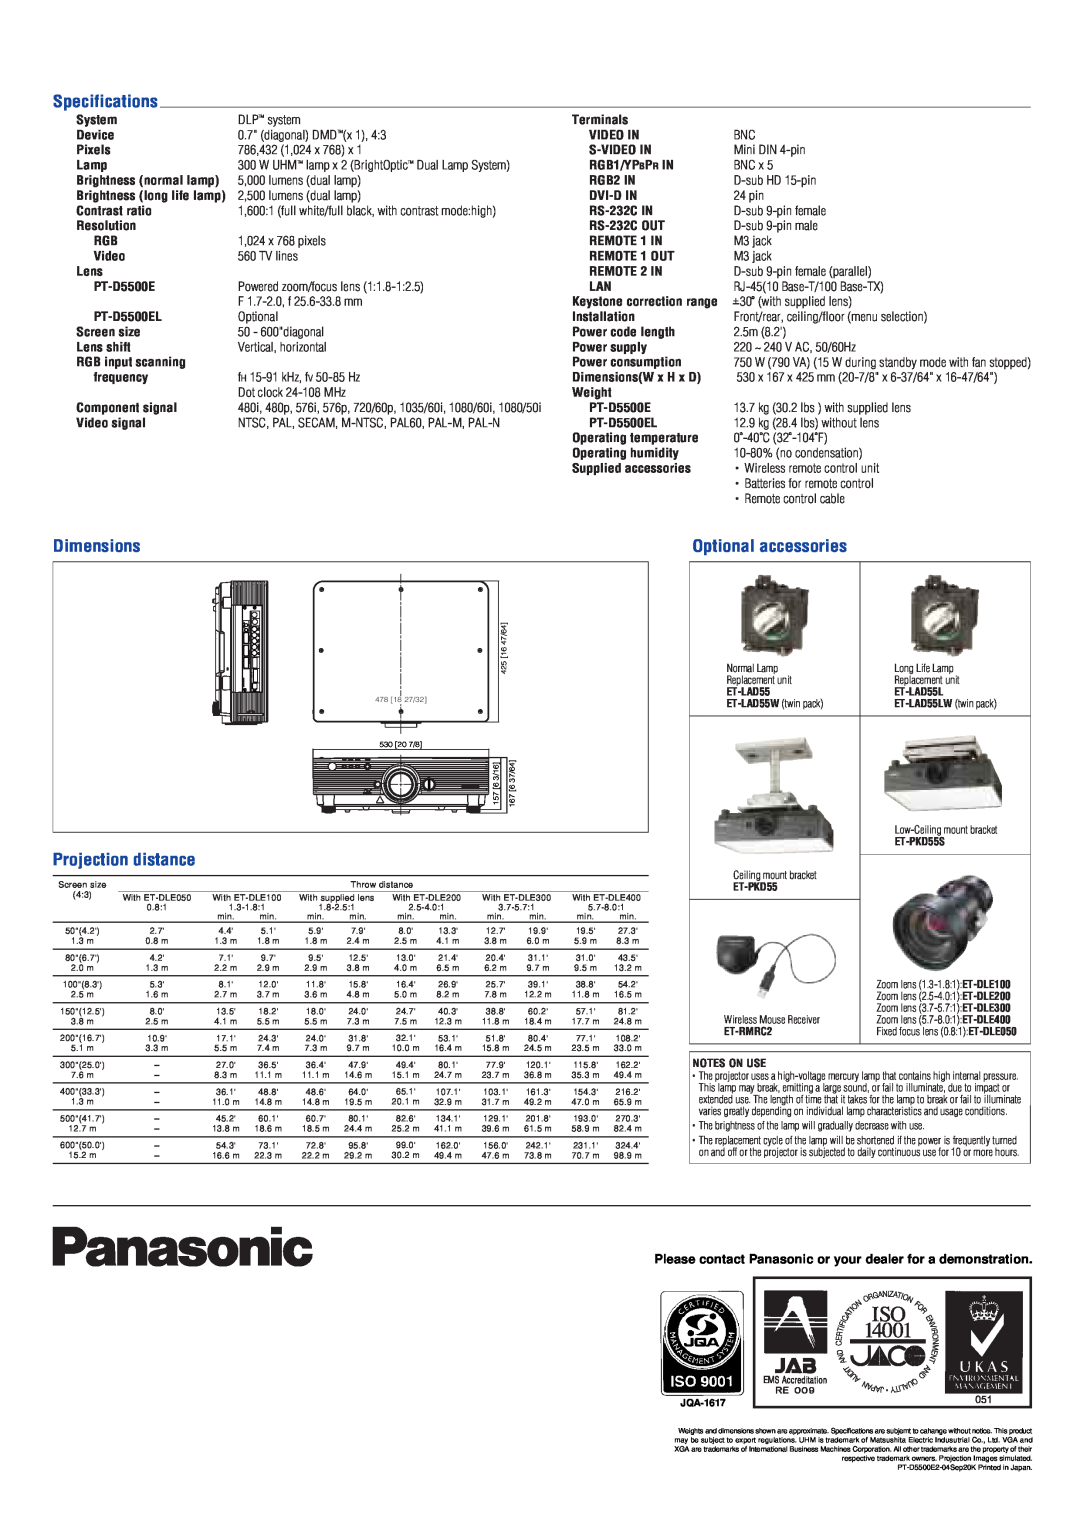 Panasonic PT-D5500E/EL manual Specifications, Projection distance, Optional accessories, Dimensions 